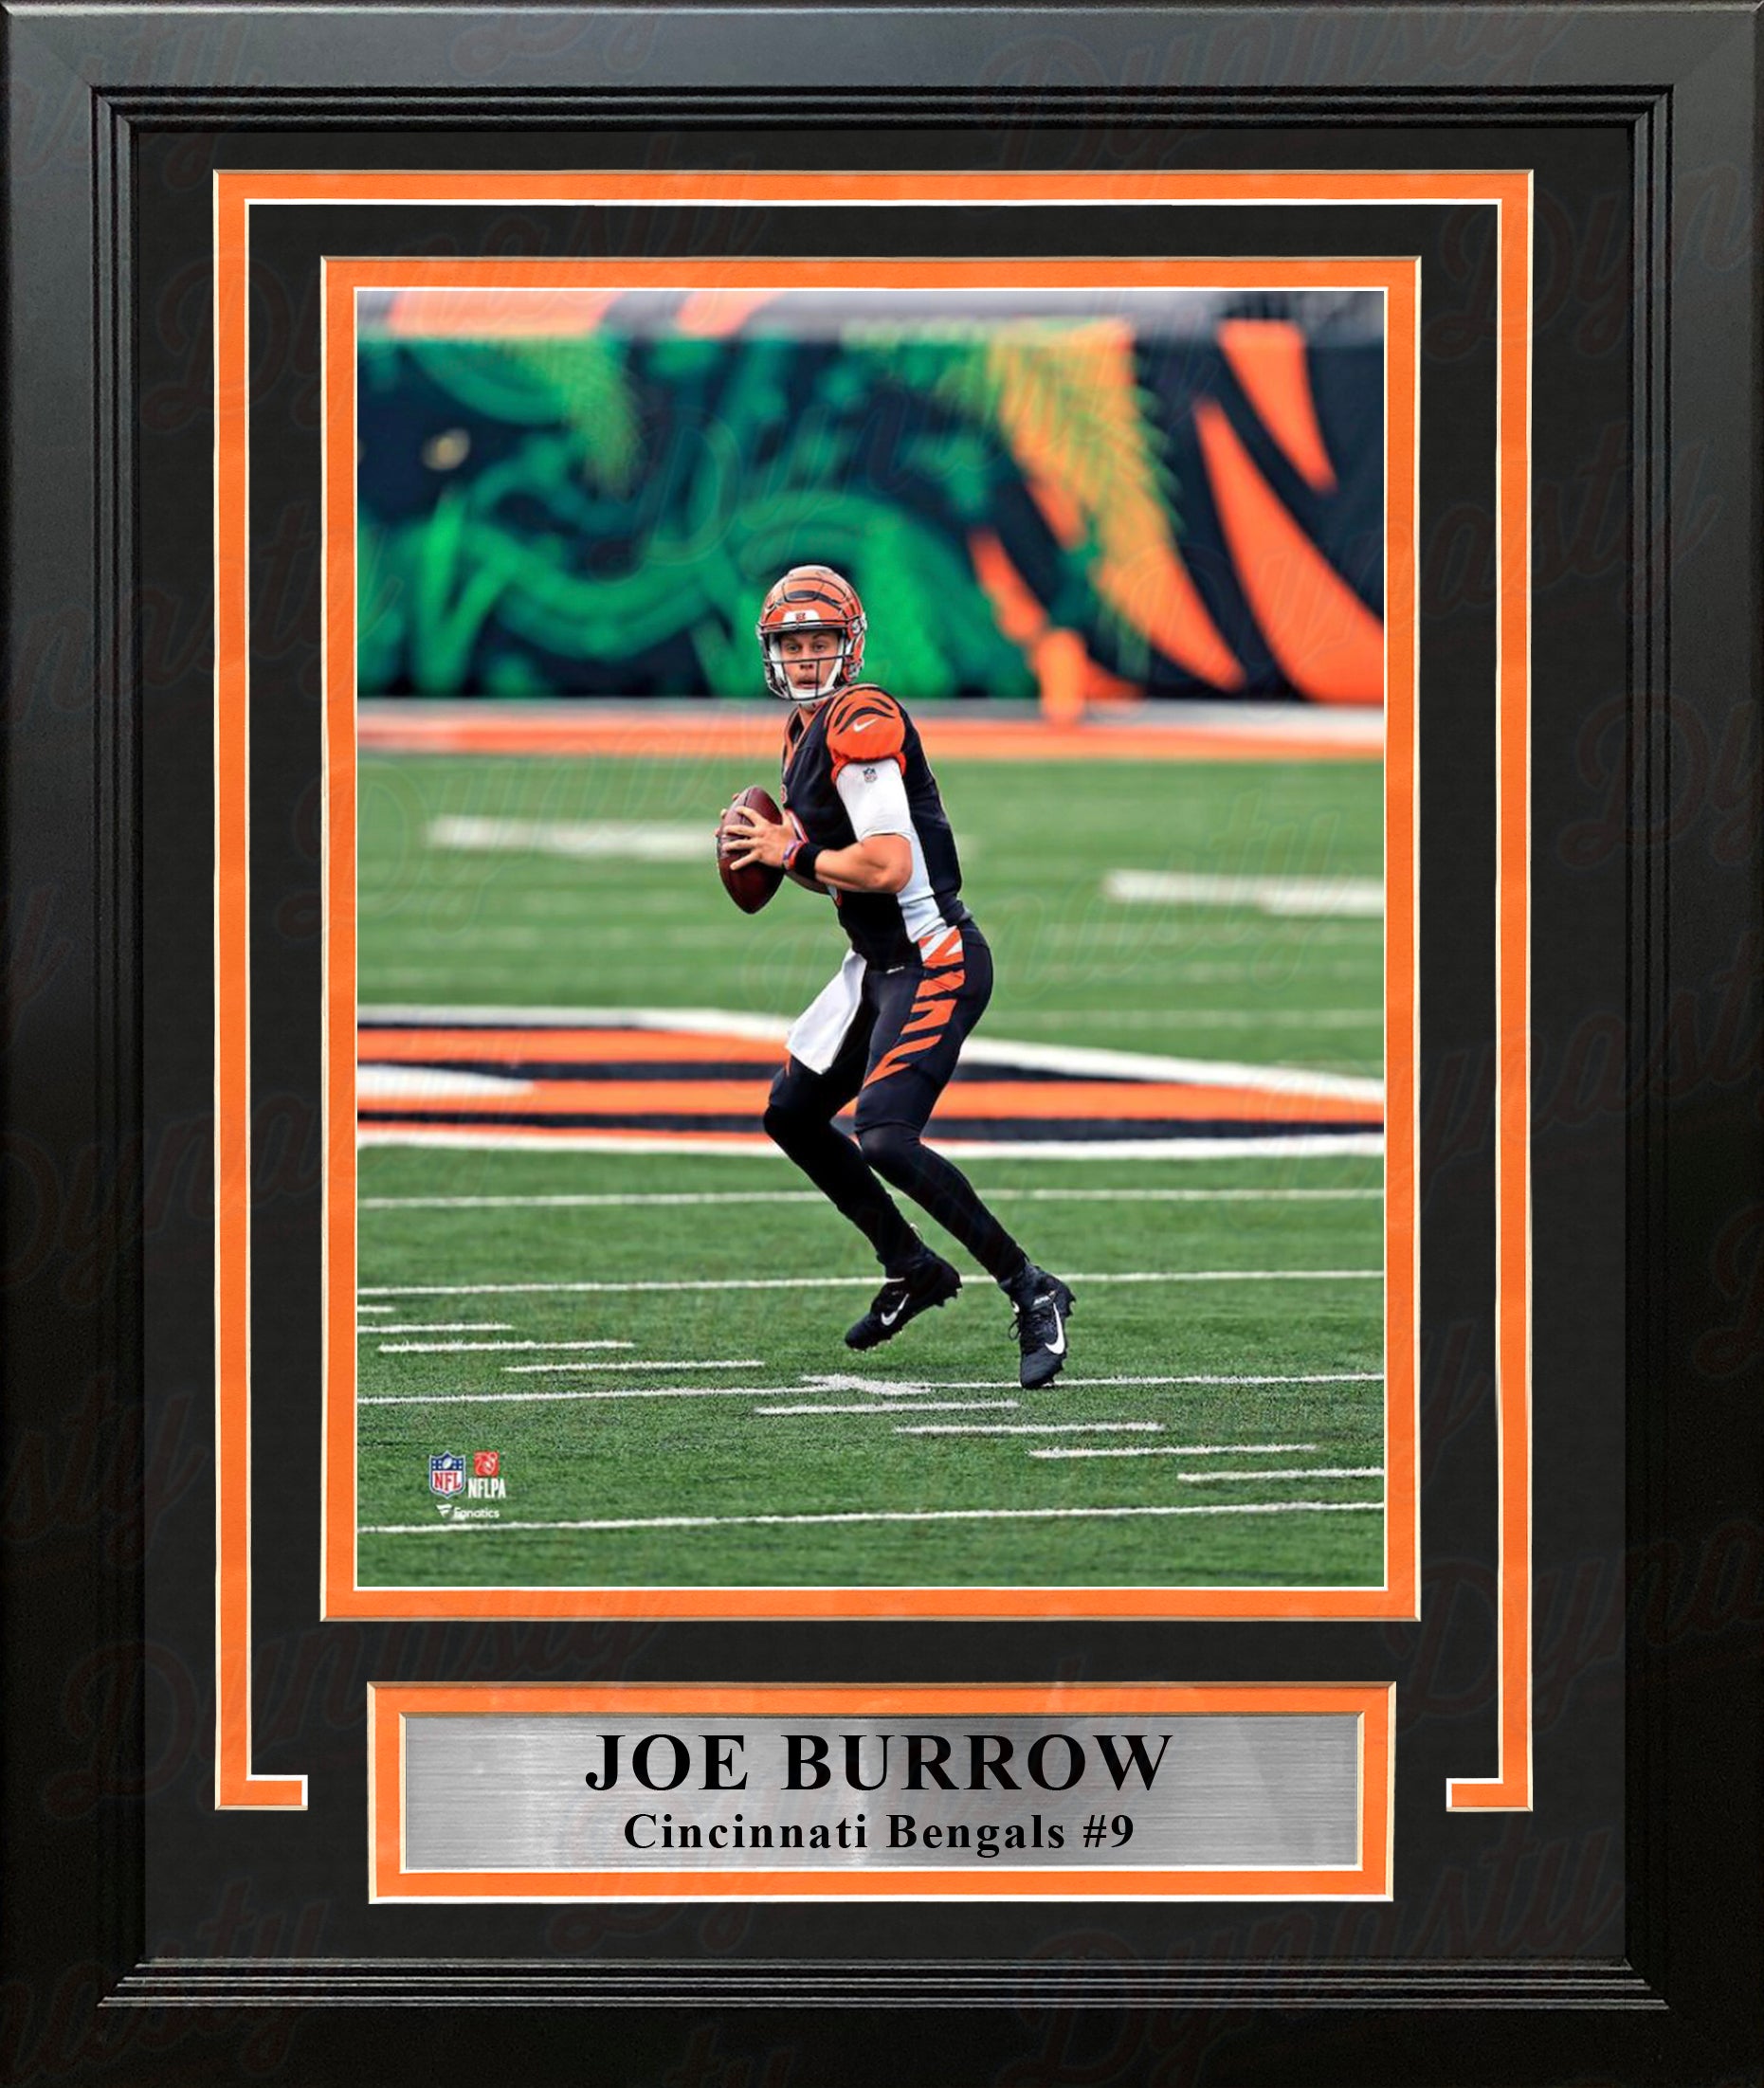 Joe Burrow Cincinnati Bengals Unsigned First Career Win Photograph